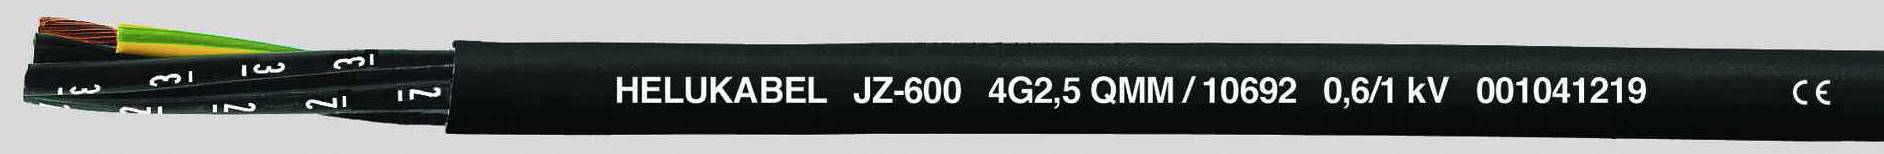 HELUKABEL JZ-600 Steuerleitung 5 G 0.50 mm² Schwarz 10555-500 500 m